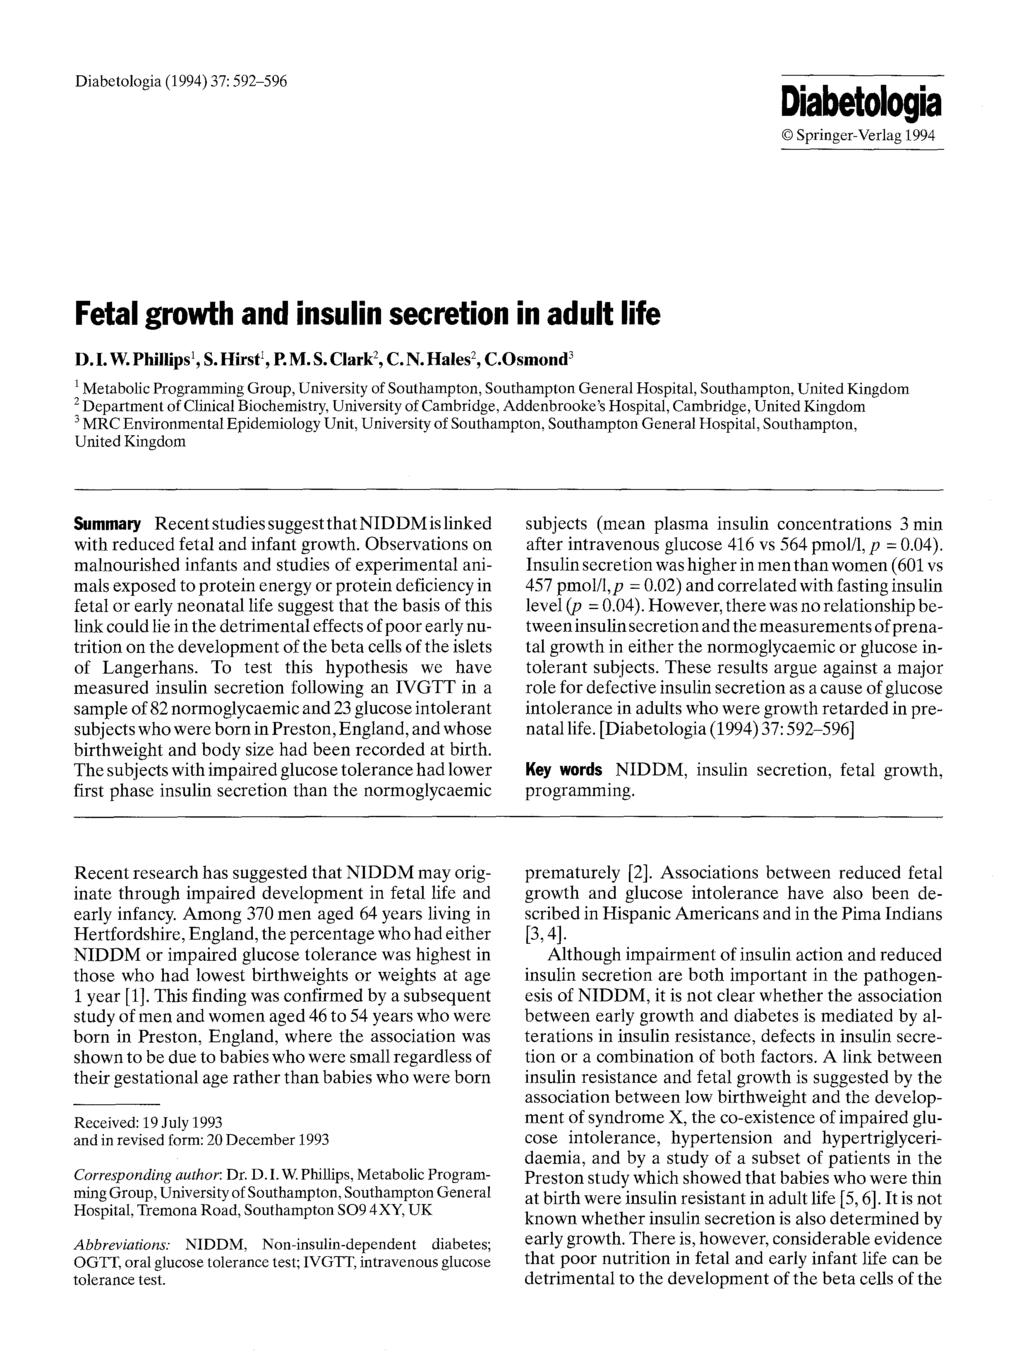 Diabetologia (1994) 37:592-596 Diabetologia 9 Springer-Verlag 1994 Fetal growth and insulin secretion in adult life D. I. W. Phillips 1, S. Hirst I, P. M. S. Clark 2, C. N. Hales 2, C.